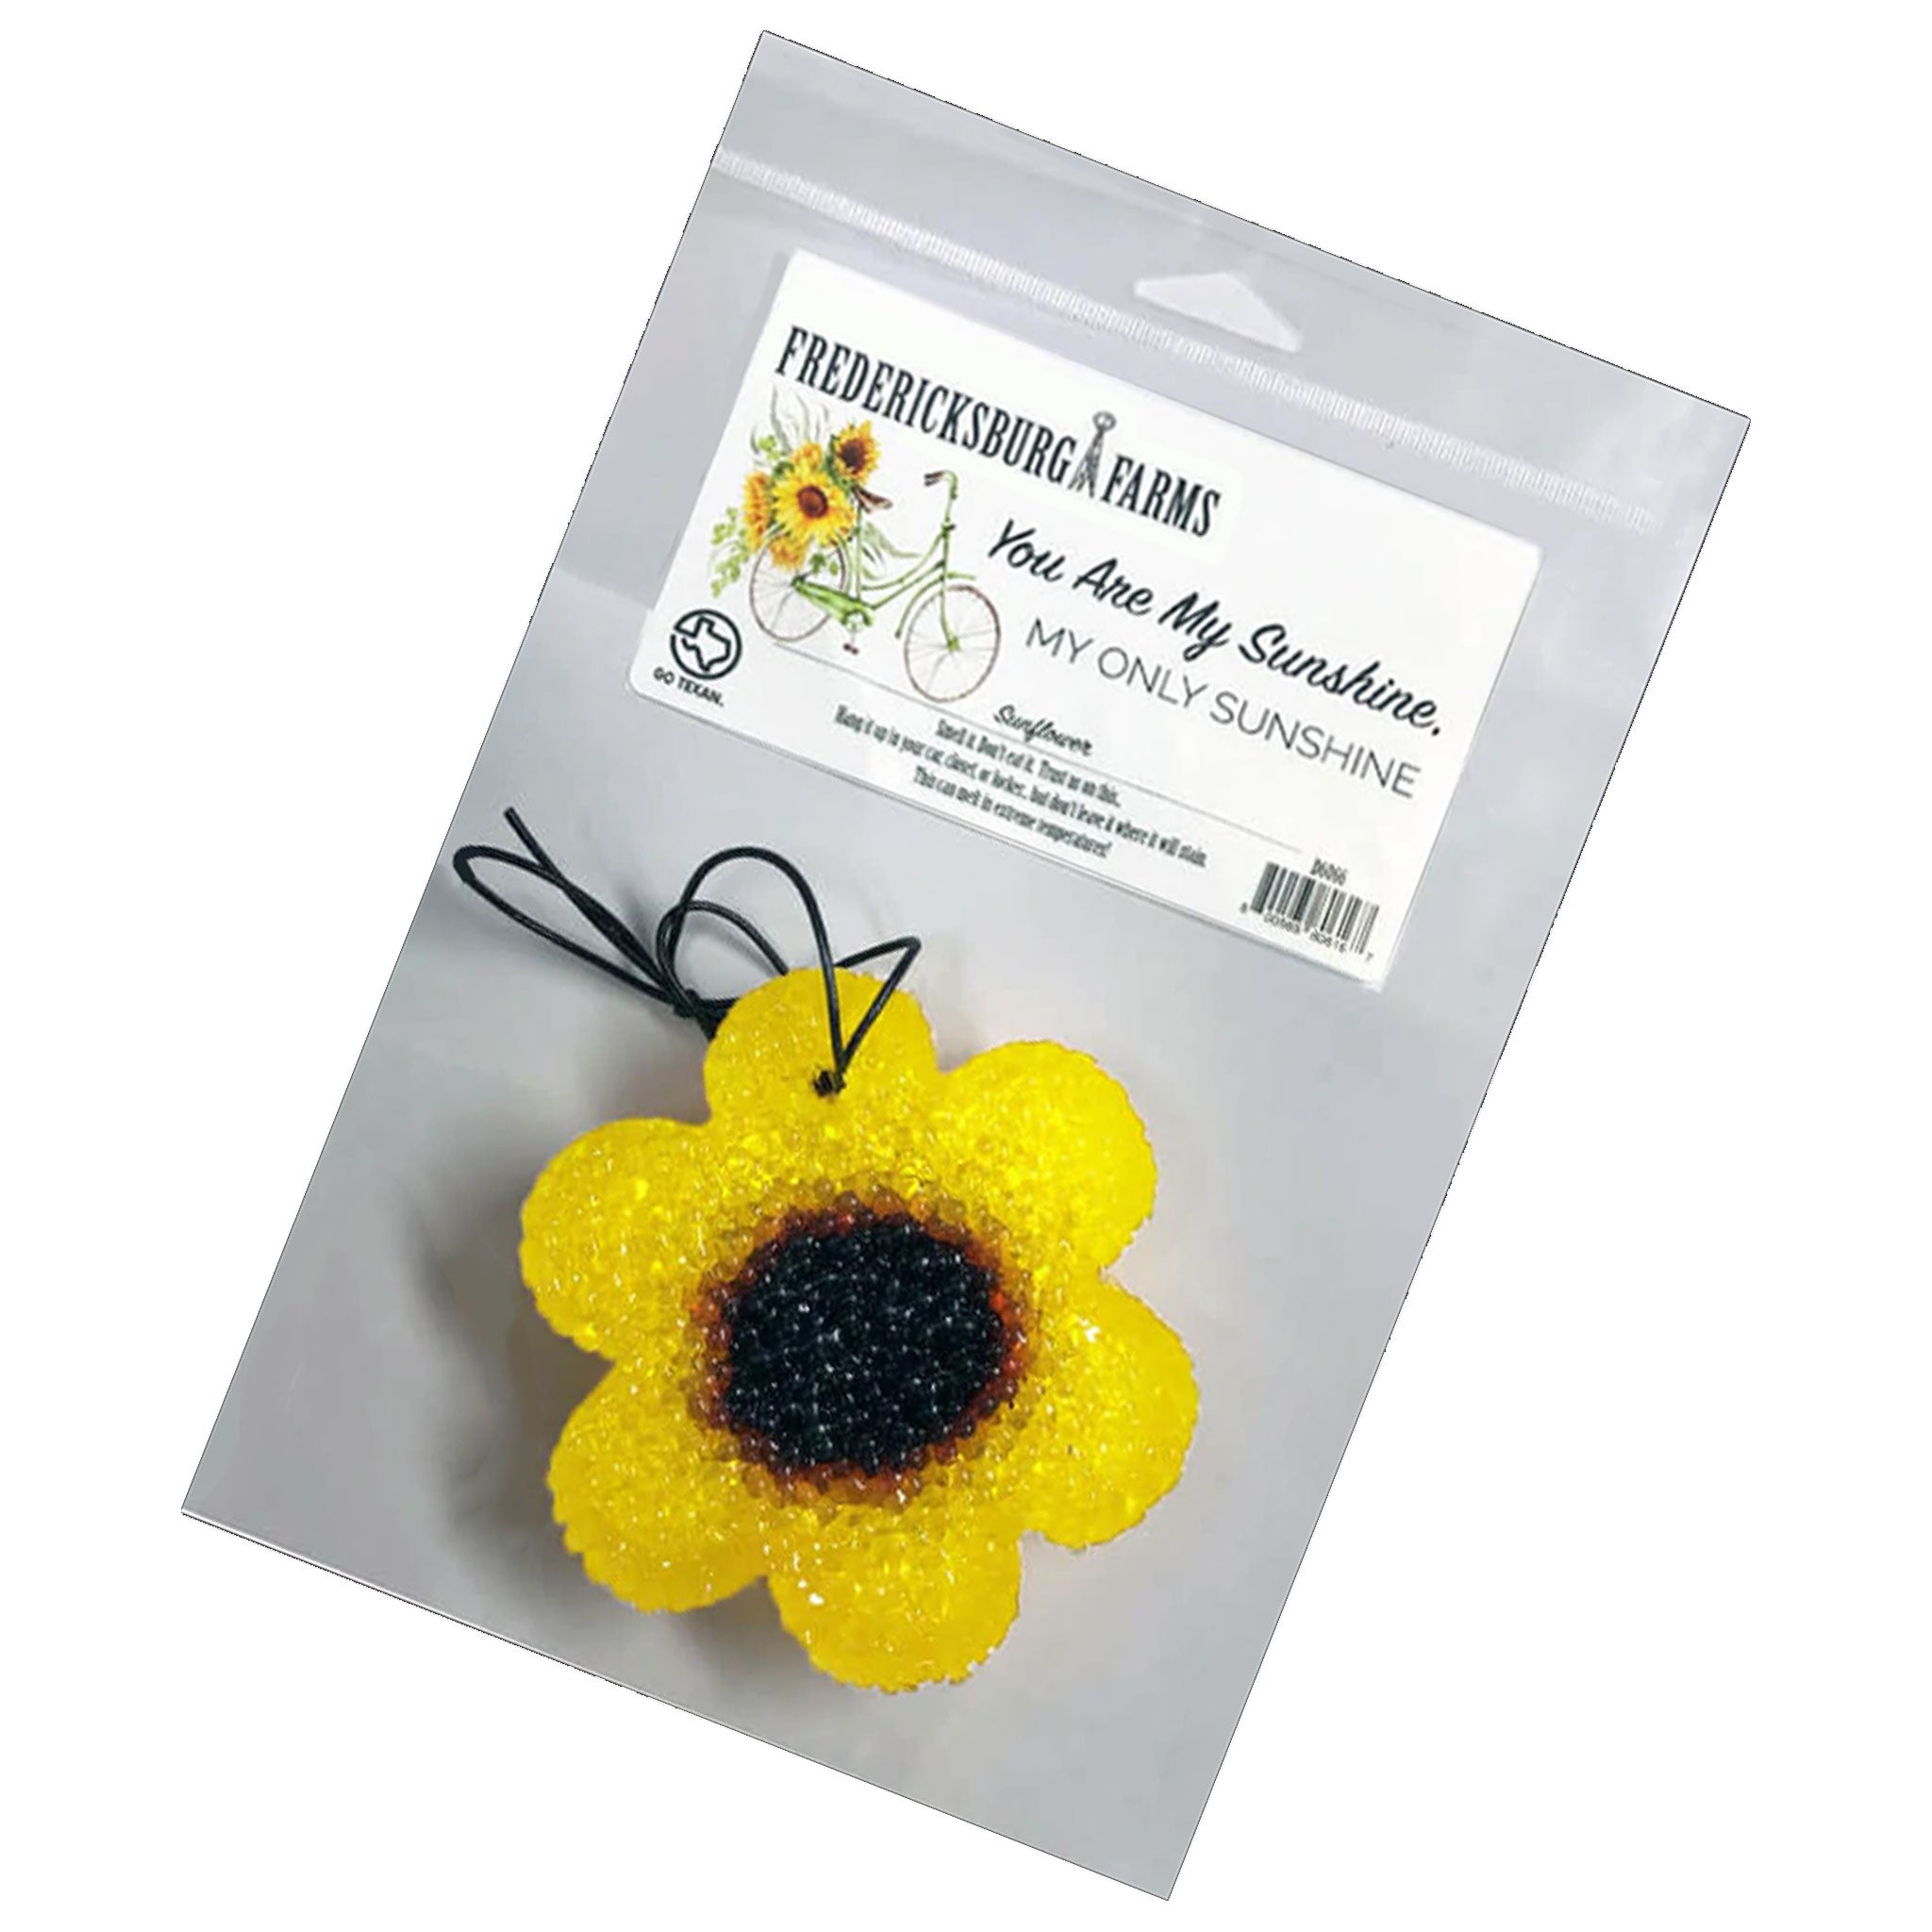 Fredericksburg Farms Sunflower Freshie